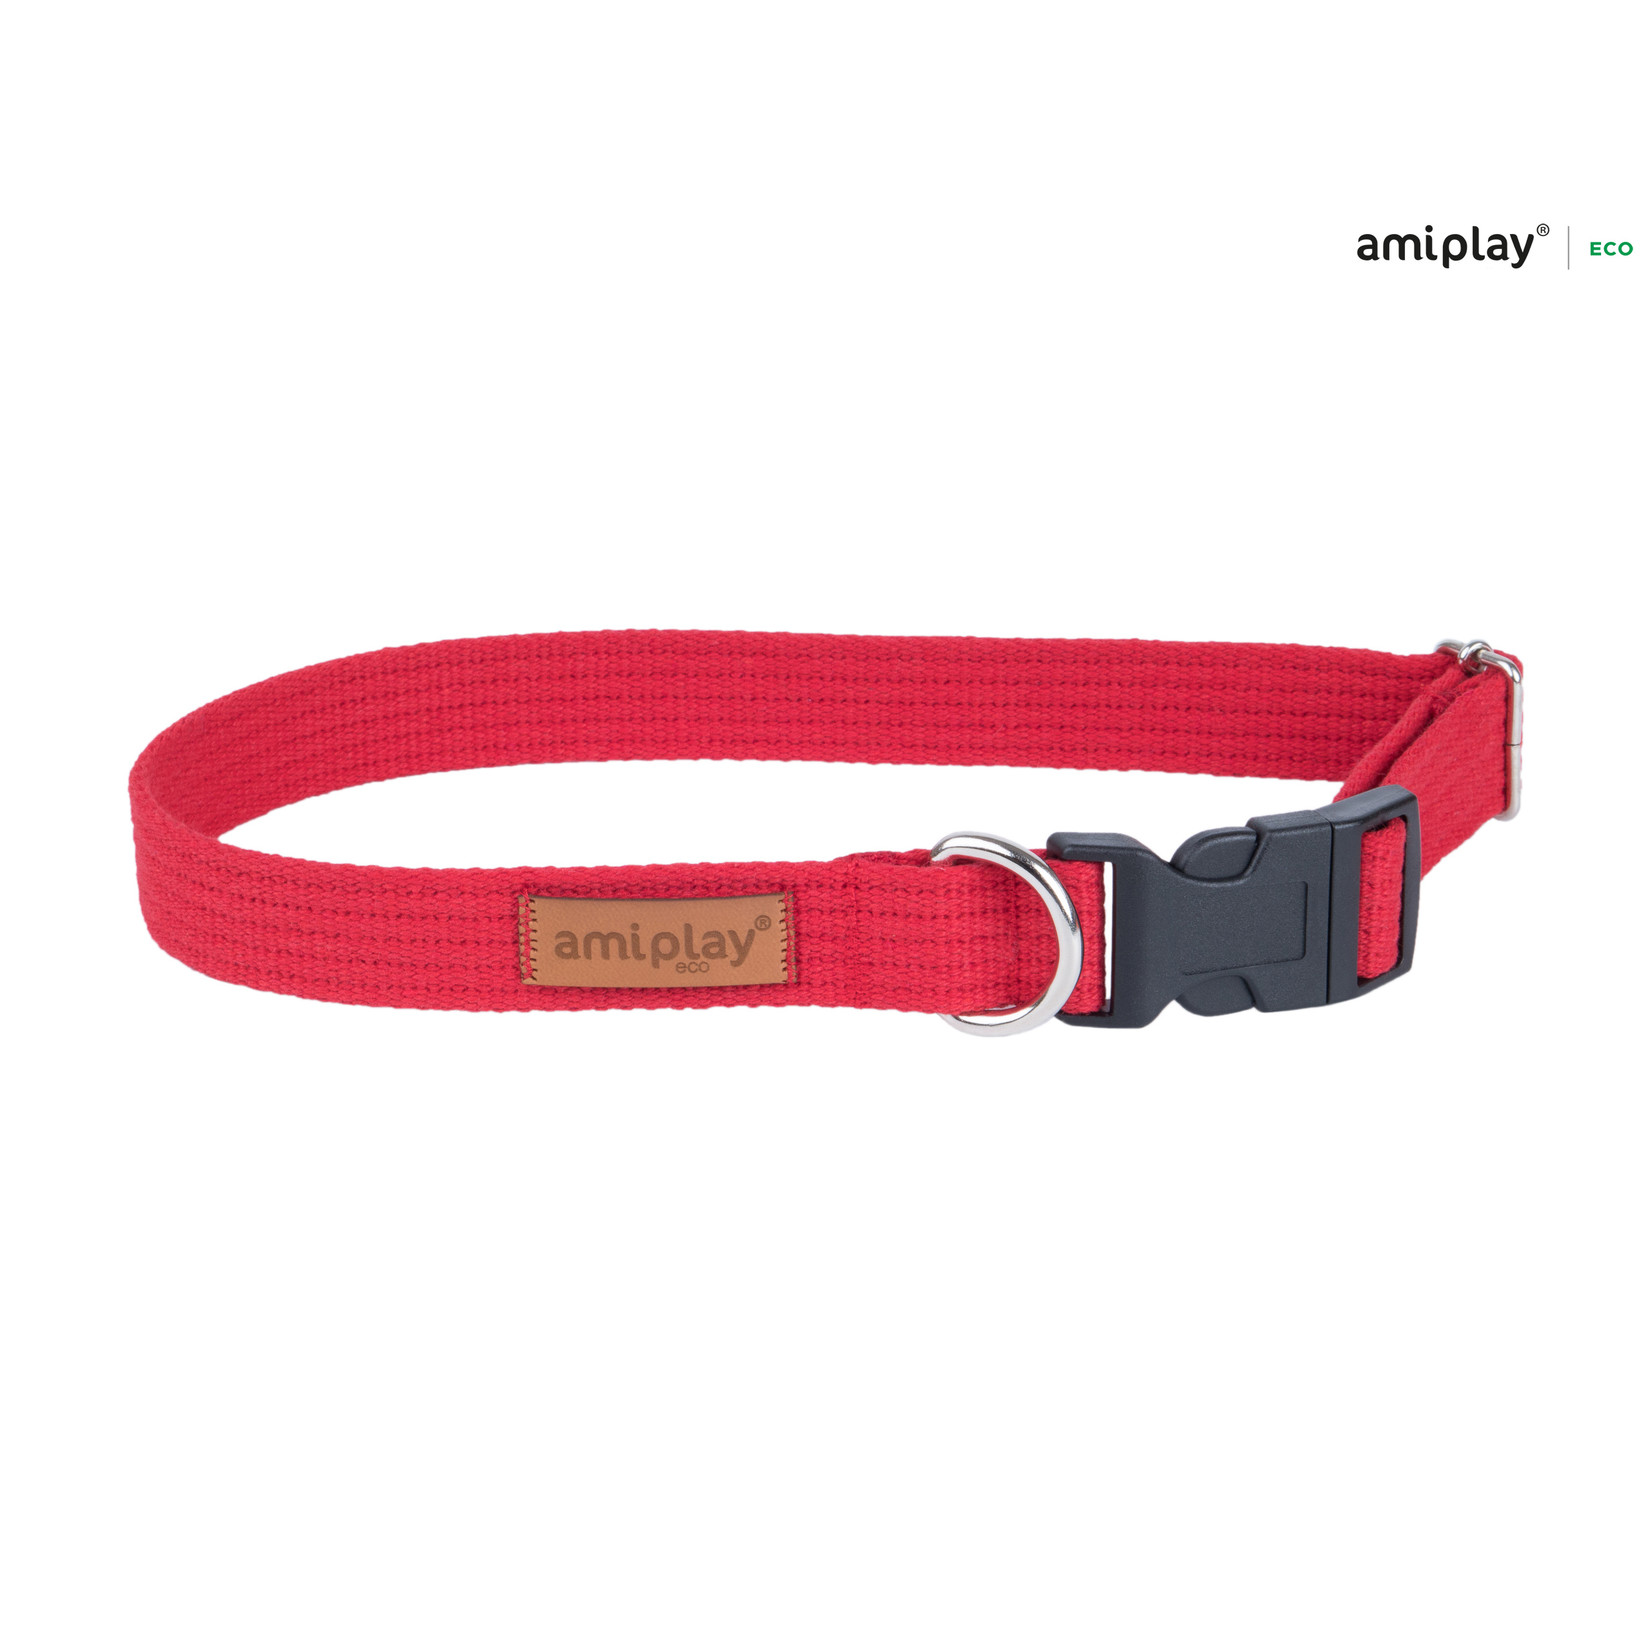 Amiplay Halsband verstelbaar Cotton rood maat-S / 28-40x1,5cm